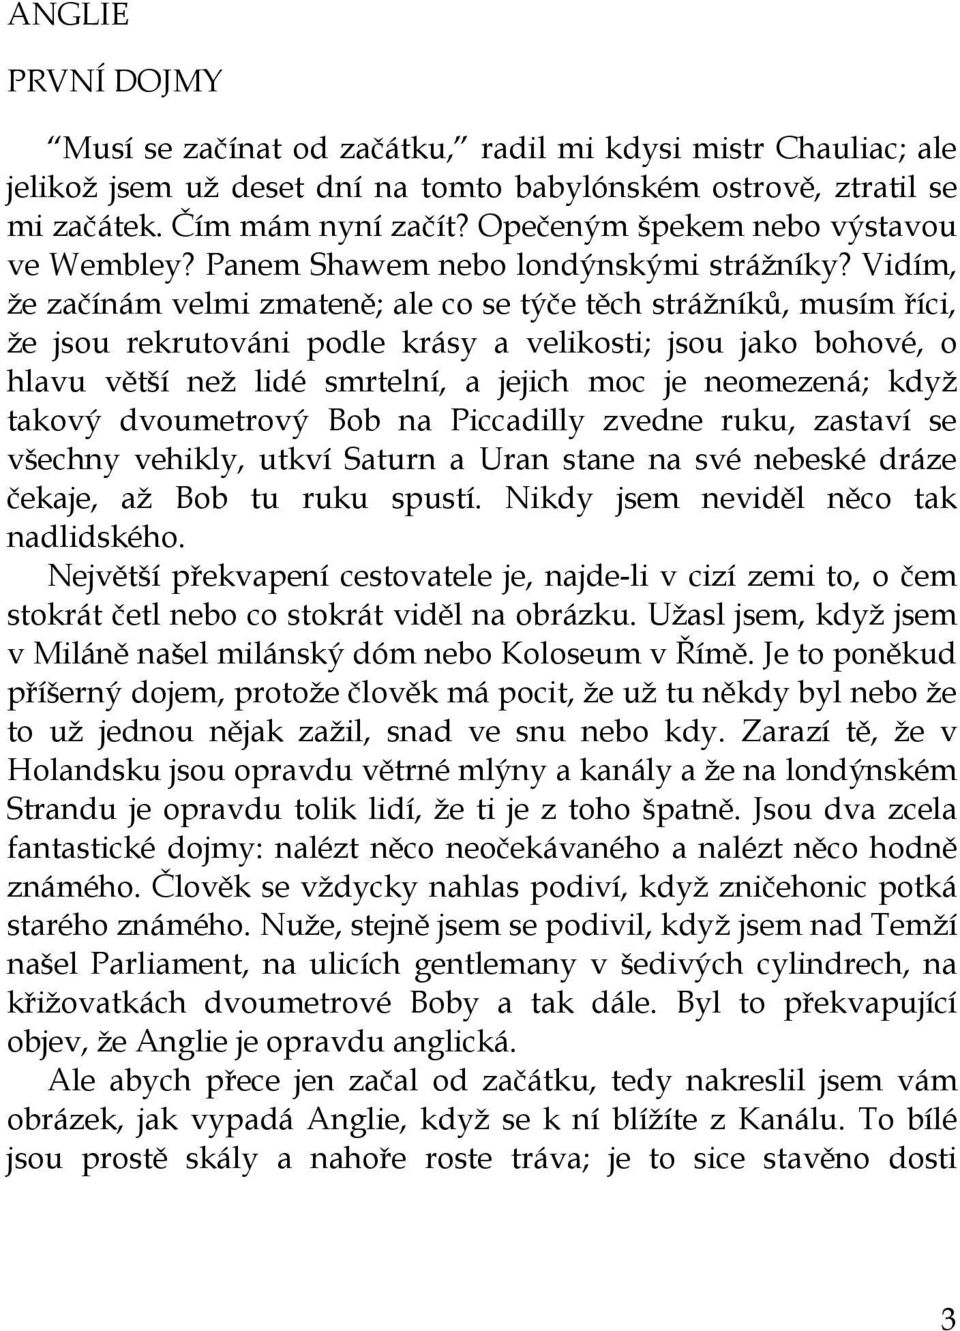 Karel Čapek ANGLICKÉ LISTY - PDF Free Download